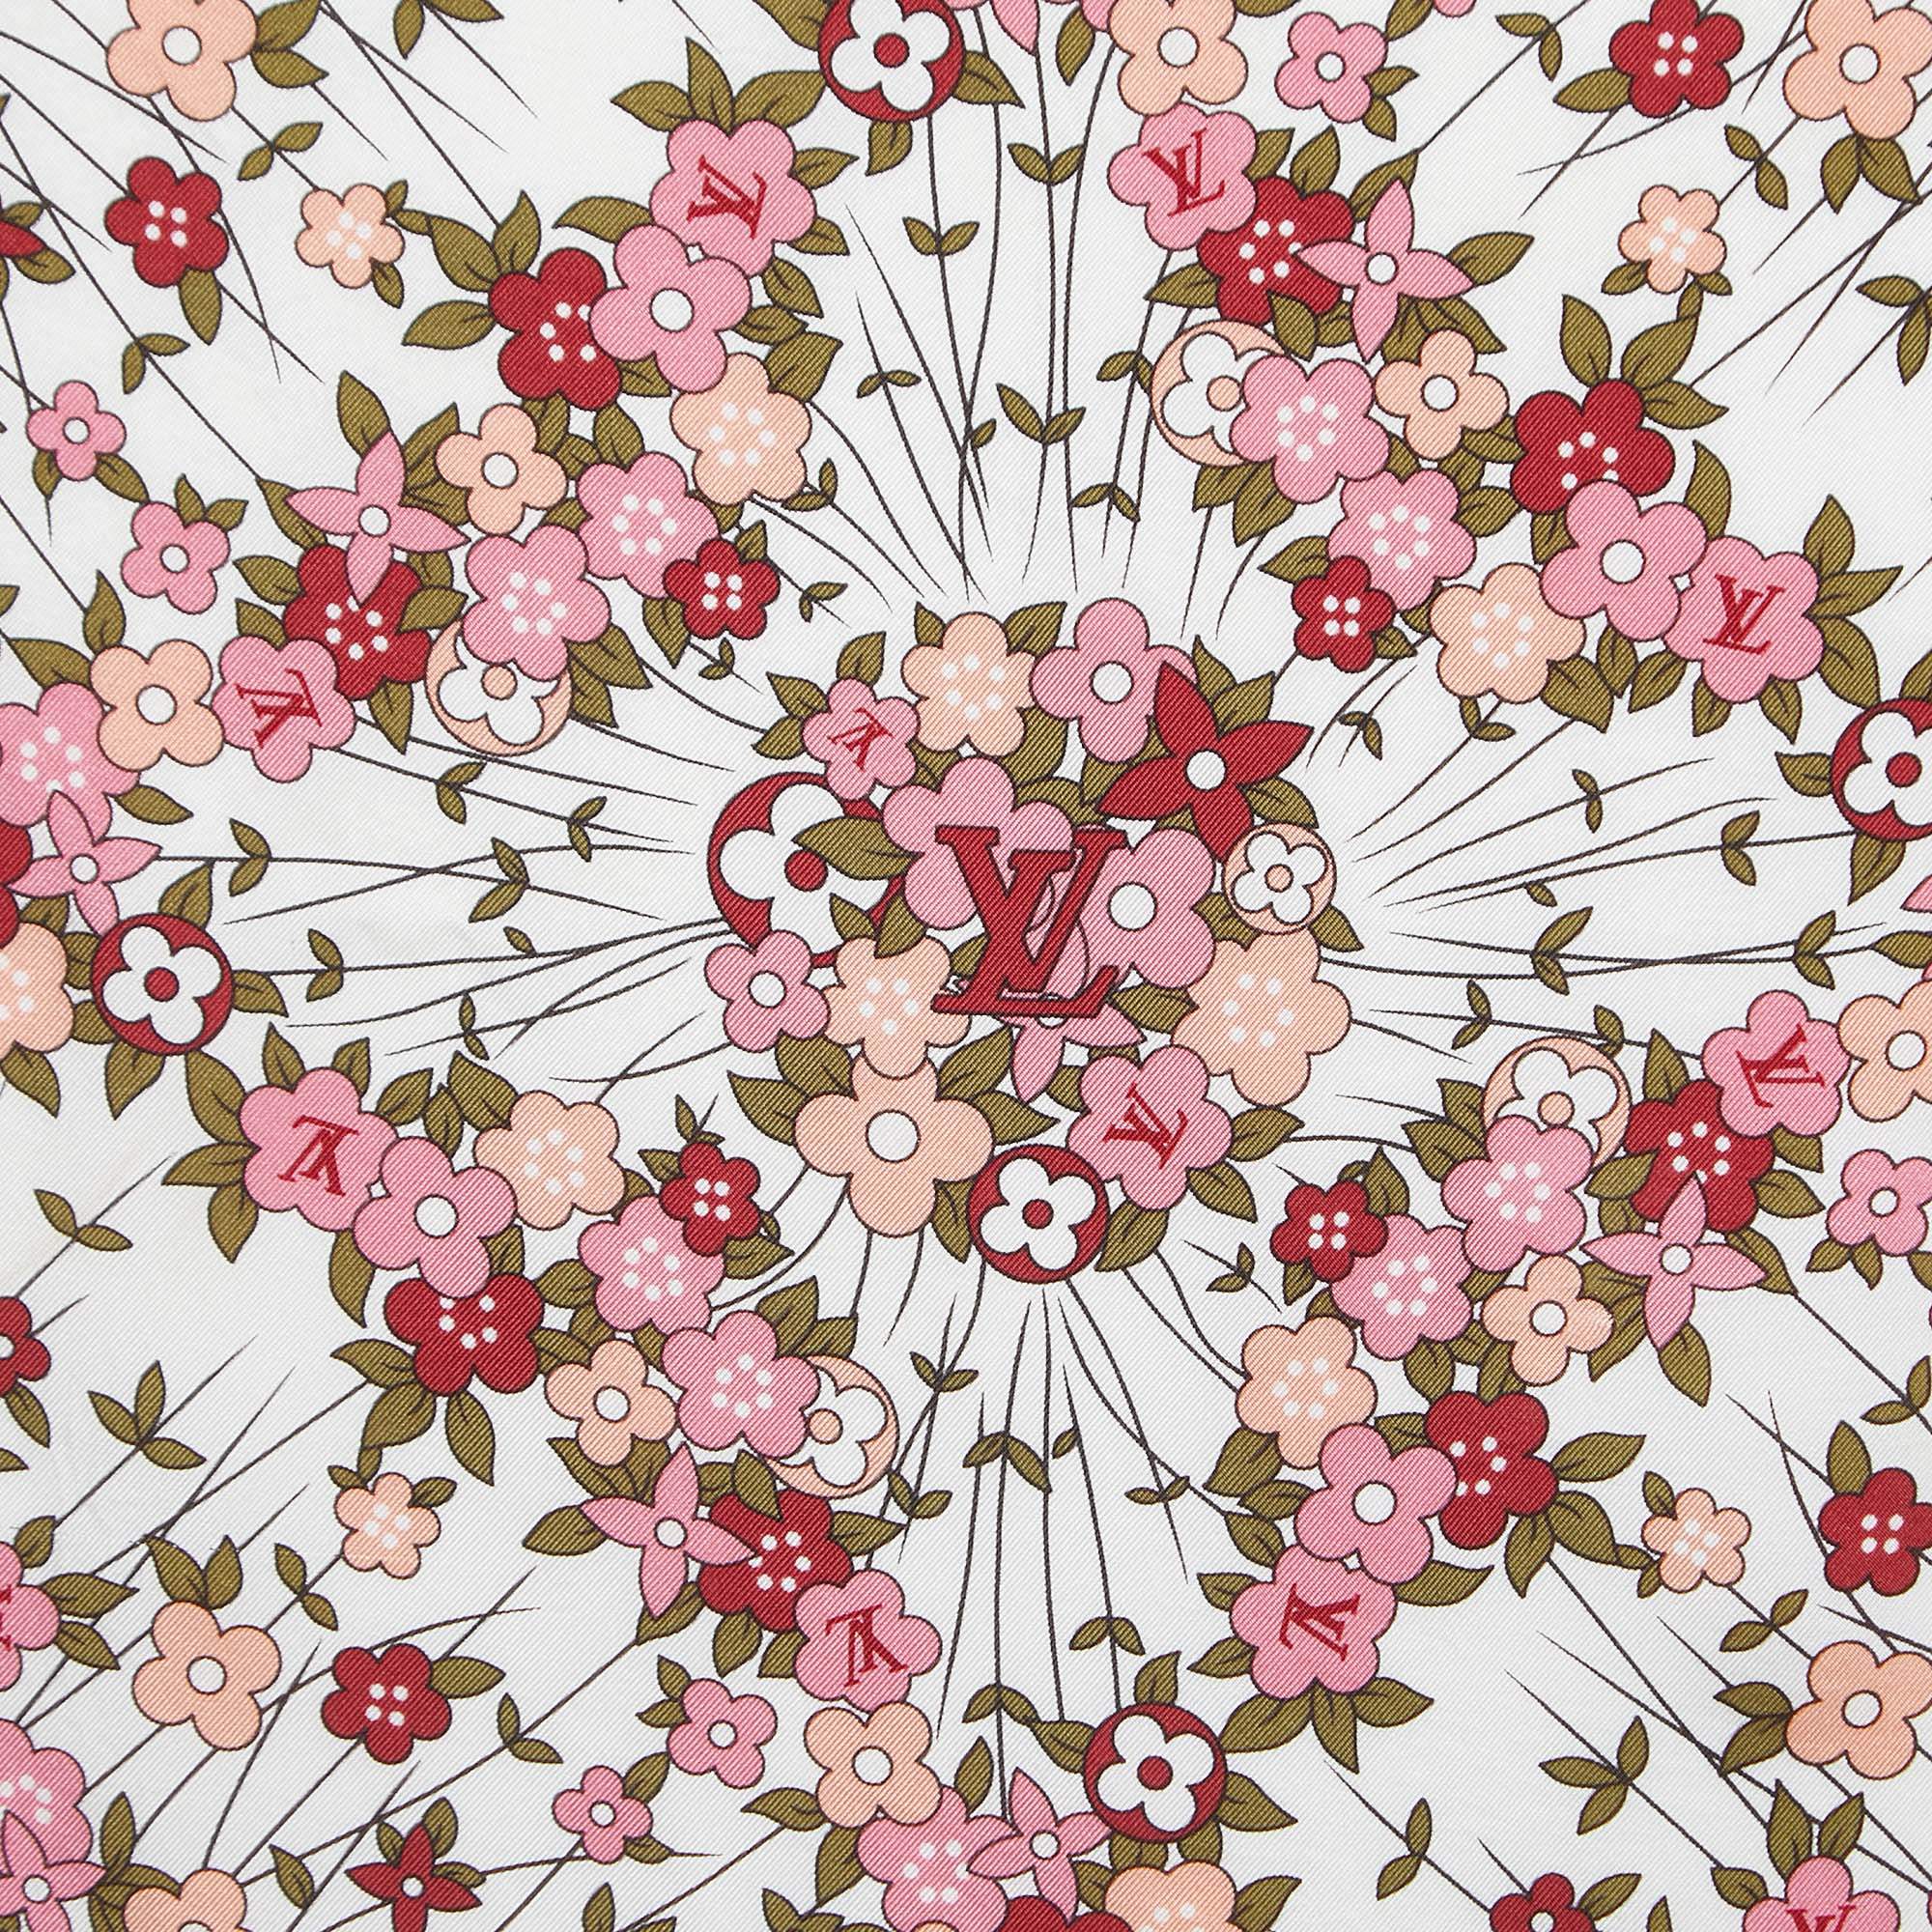 Louis Vuitton White/Maroon Floral Print Silk Olivia Scarf